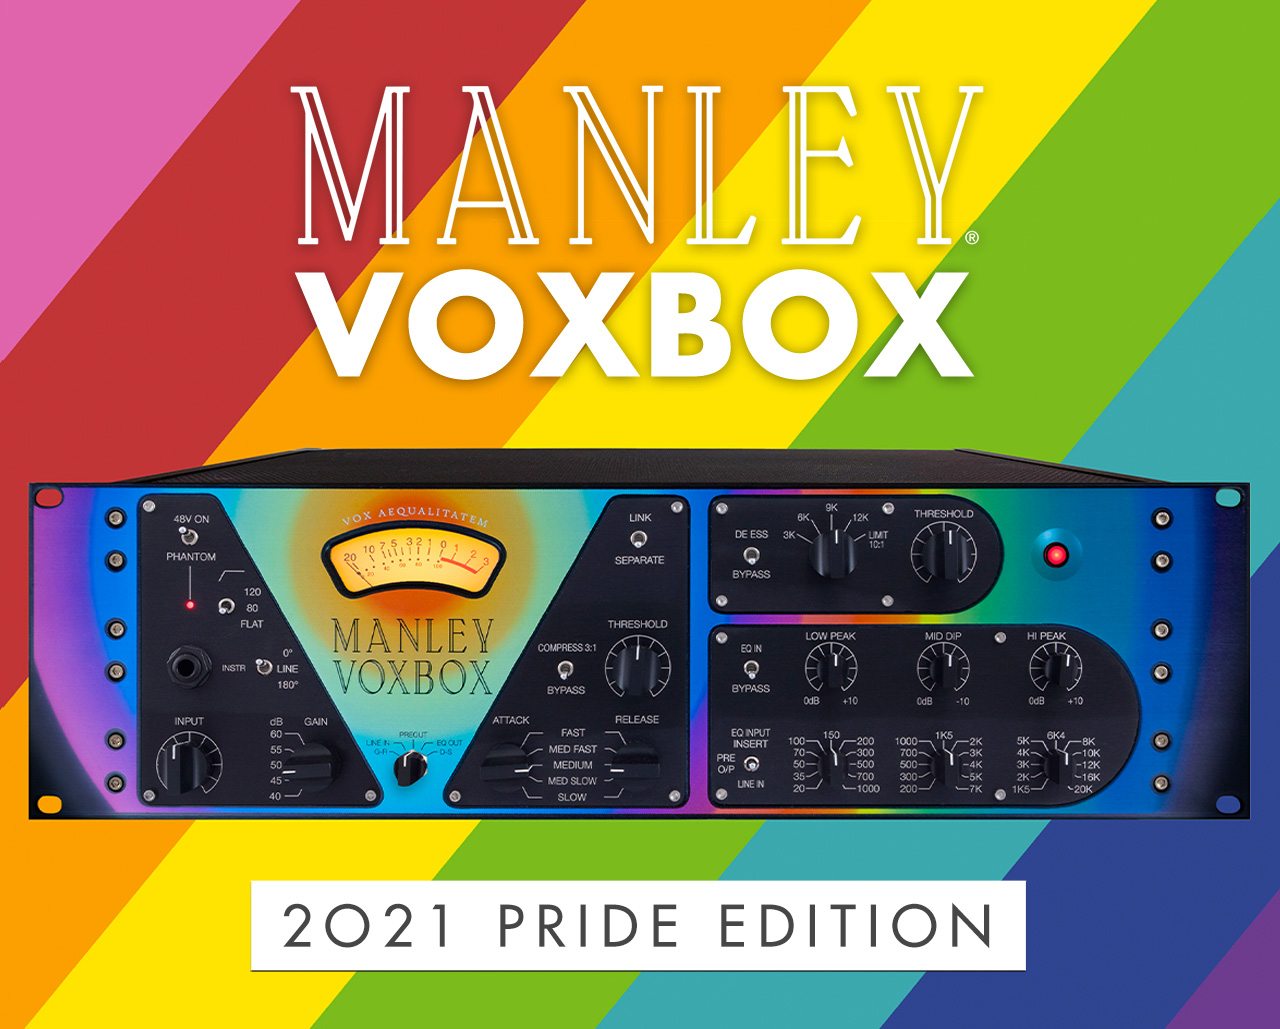 Manley VOXBOX 2021 Pride Edition